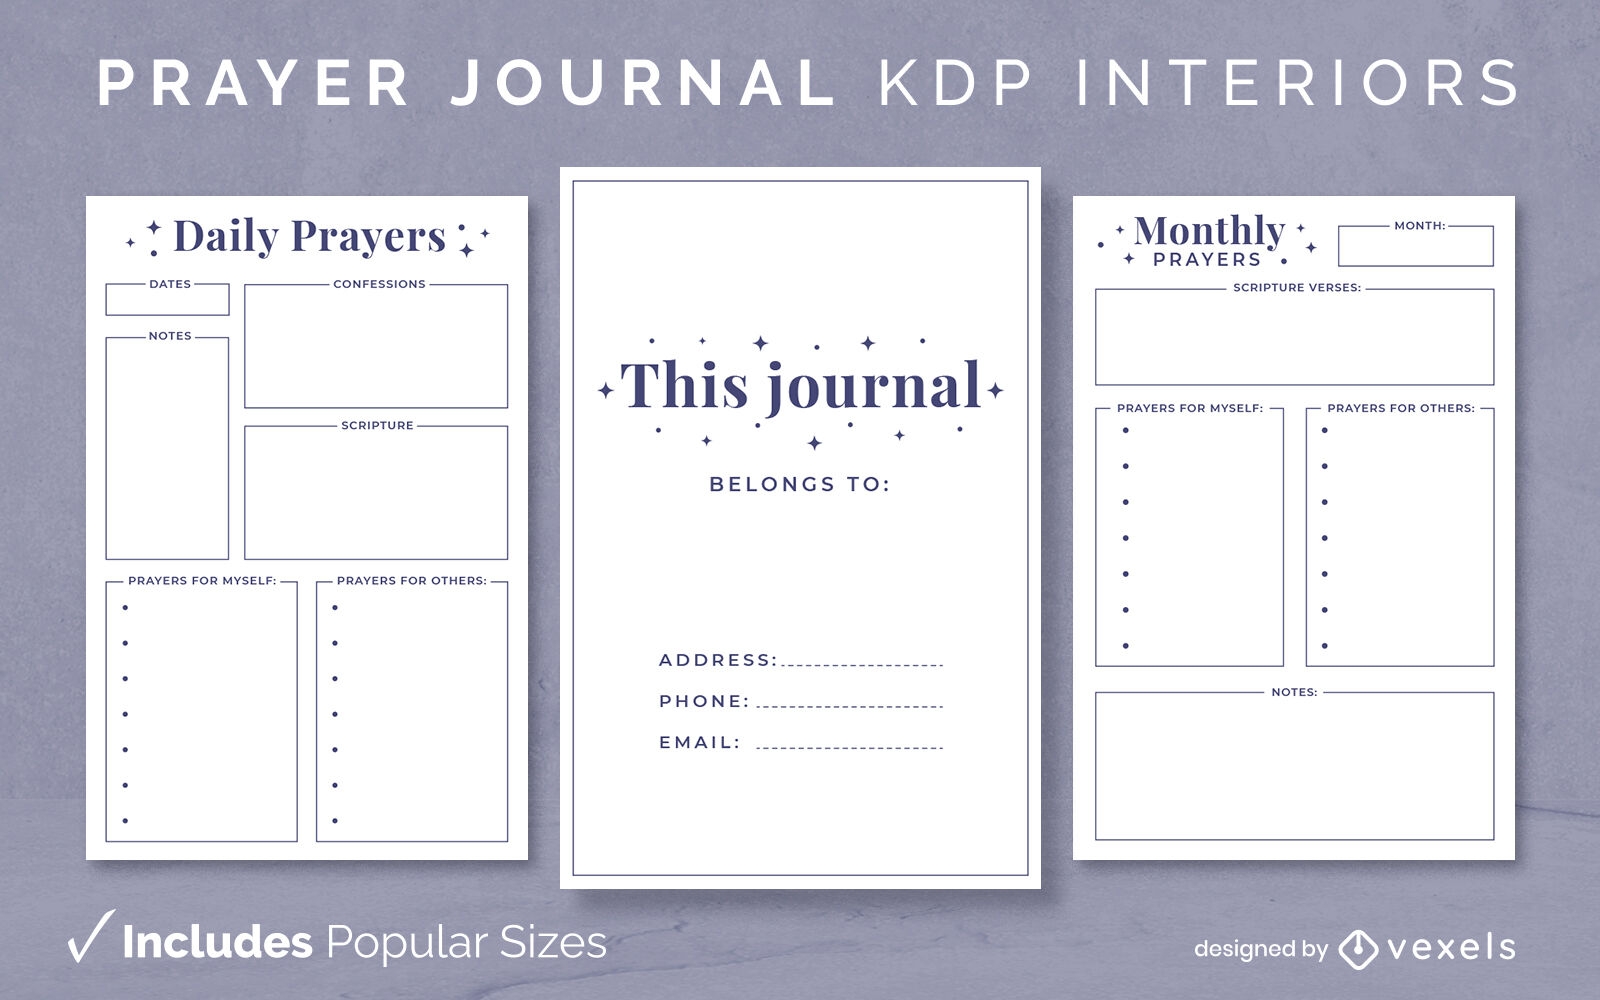 Prayer journal KDP interior design